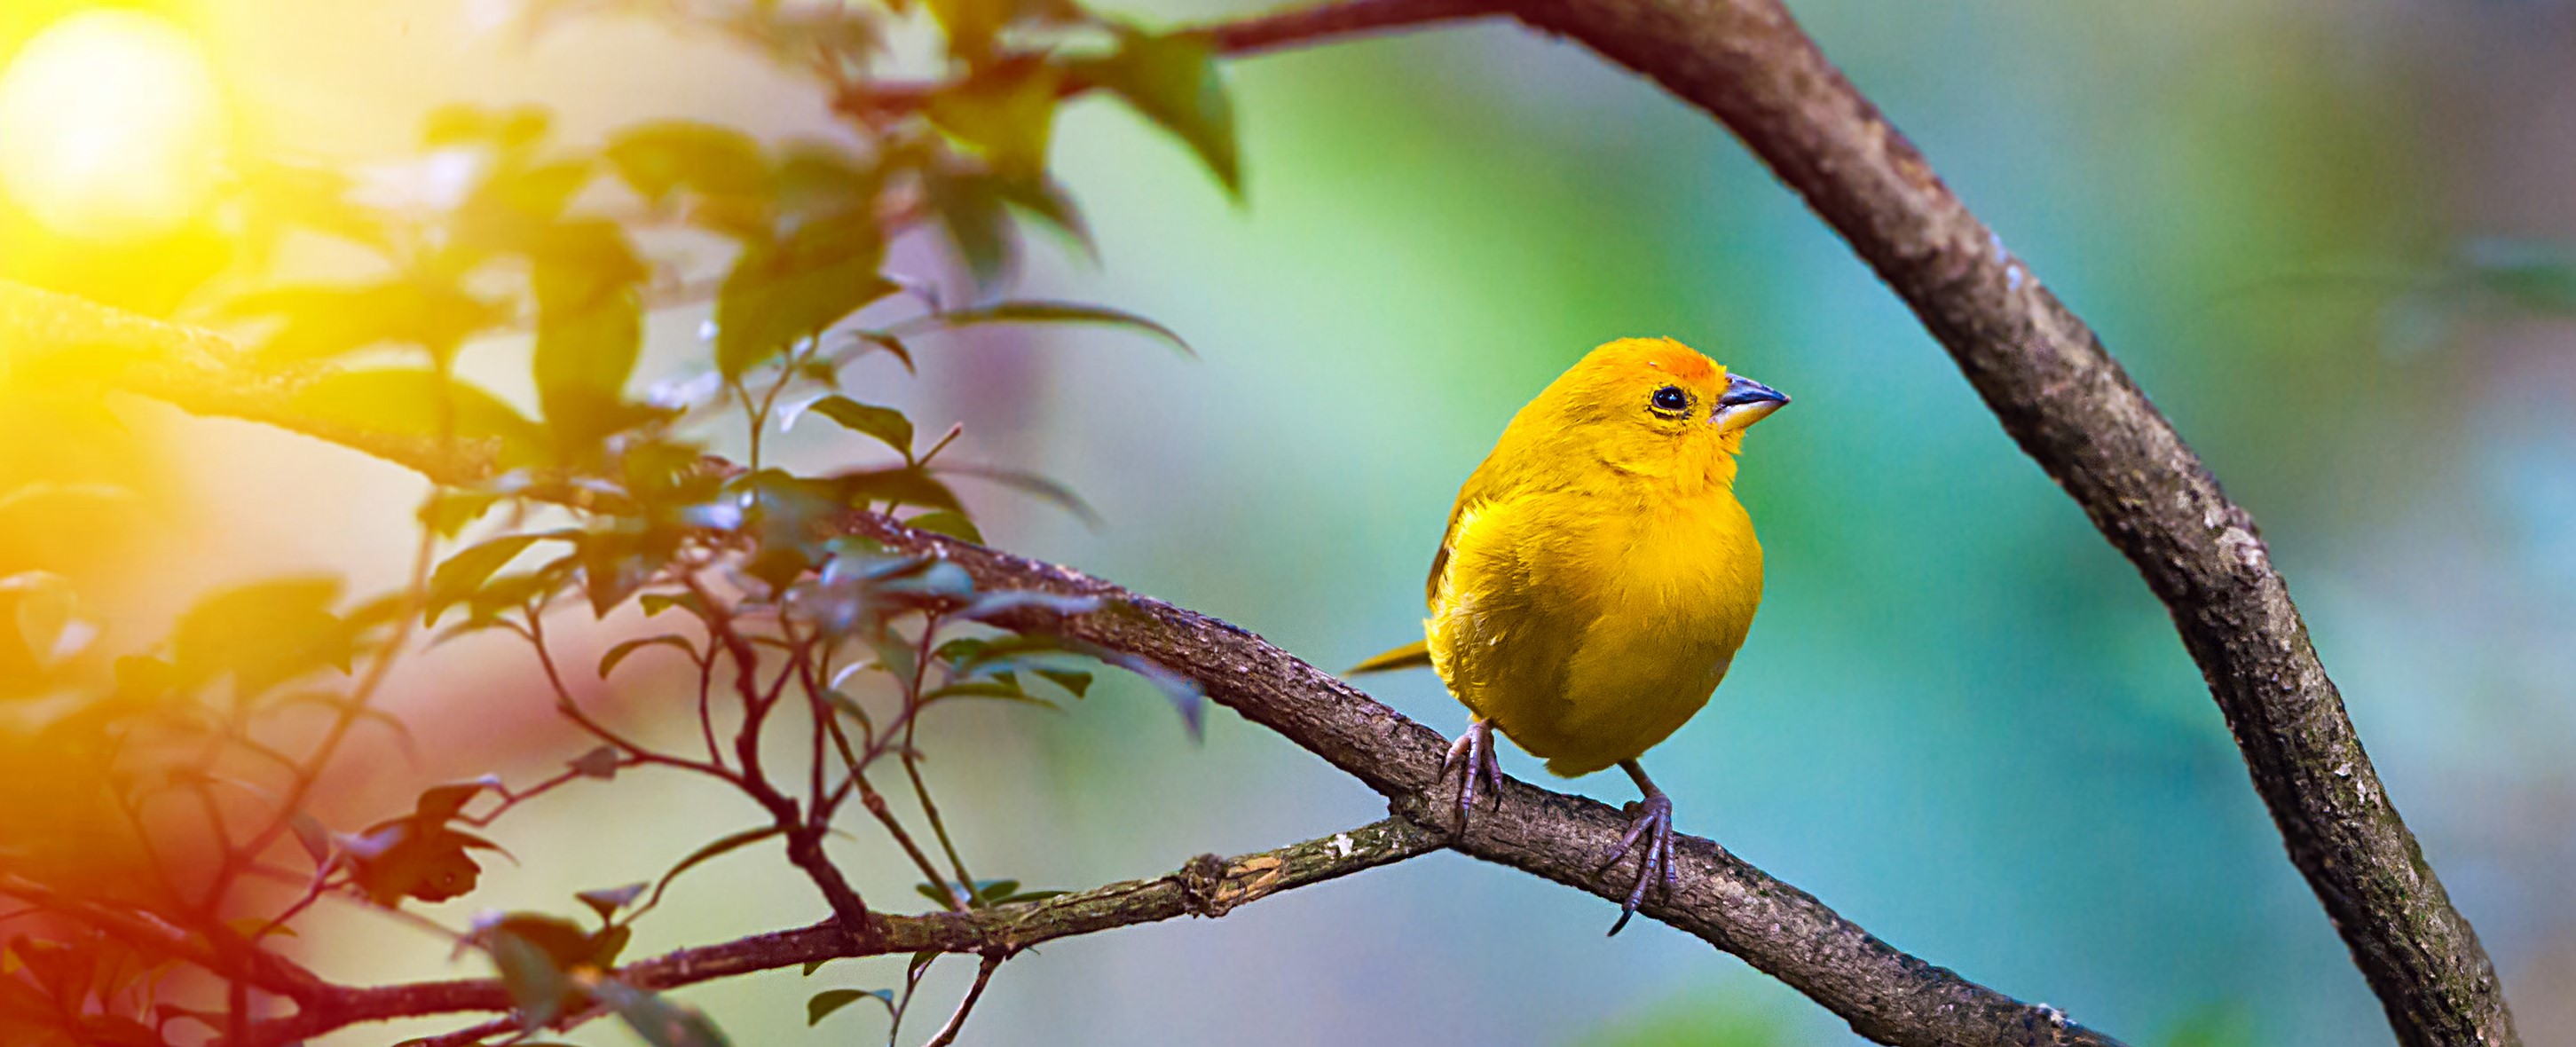 Yellow bird sitting on a branch